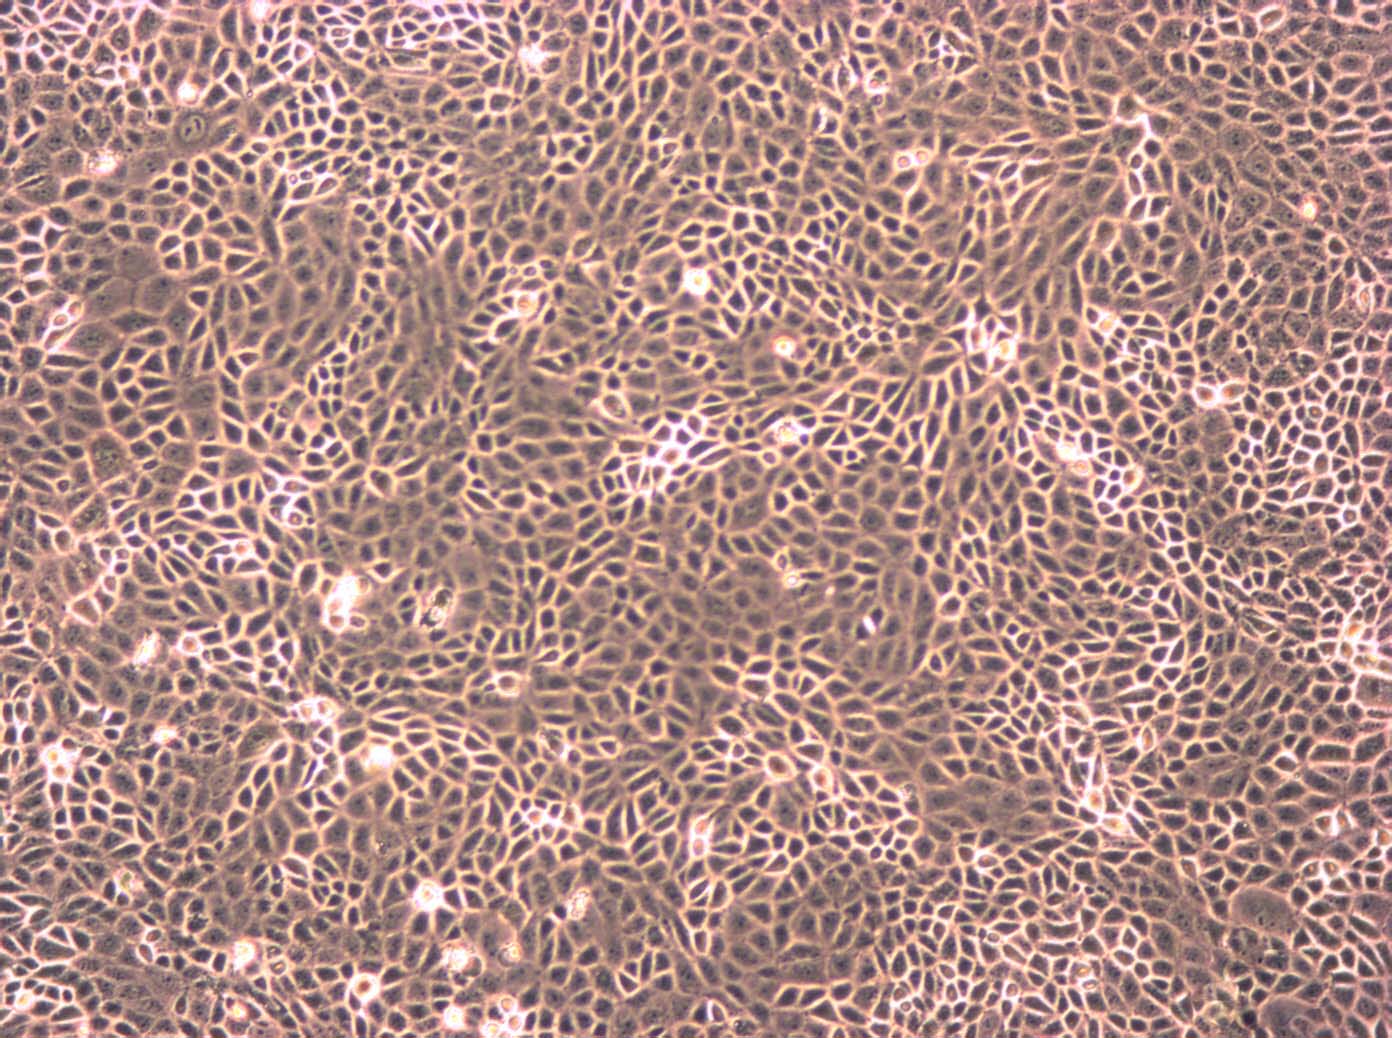 BxPC-3 Cells|人原位胰腺腺癌细胞系